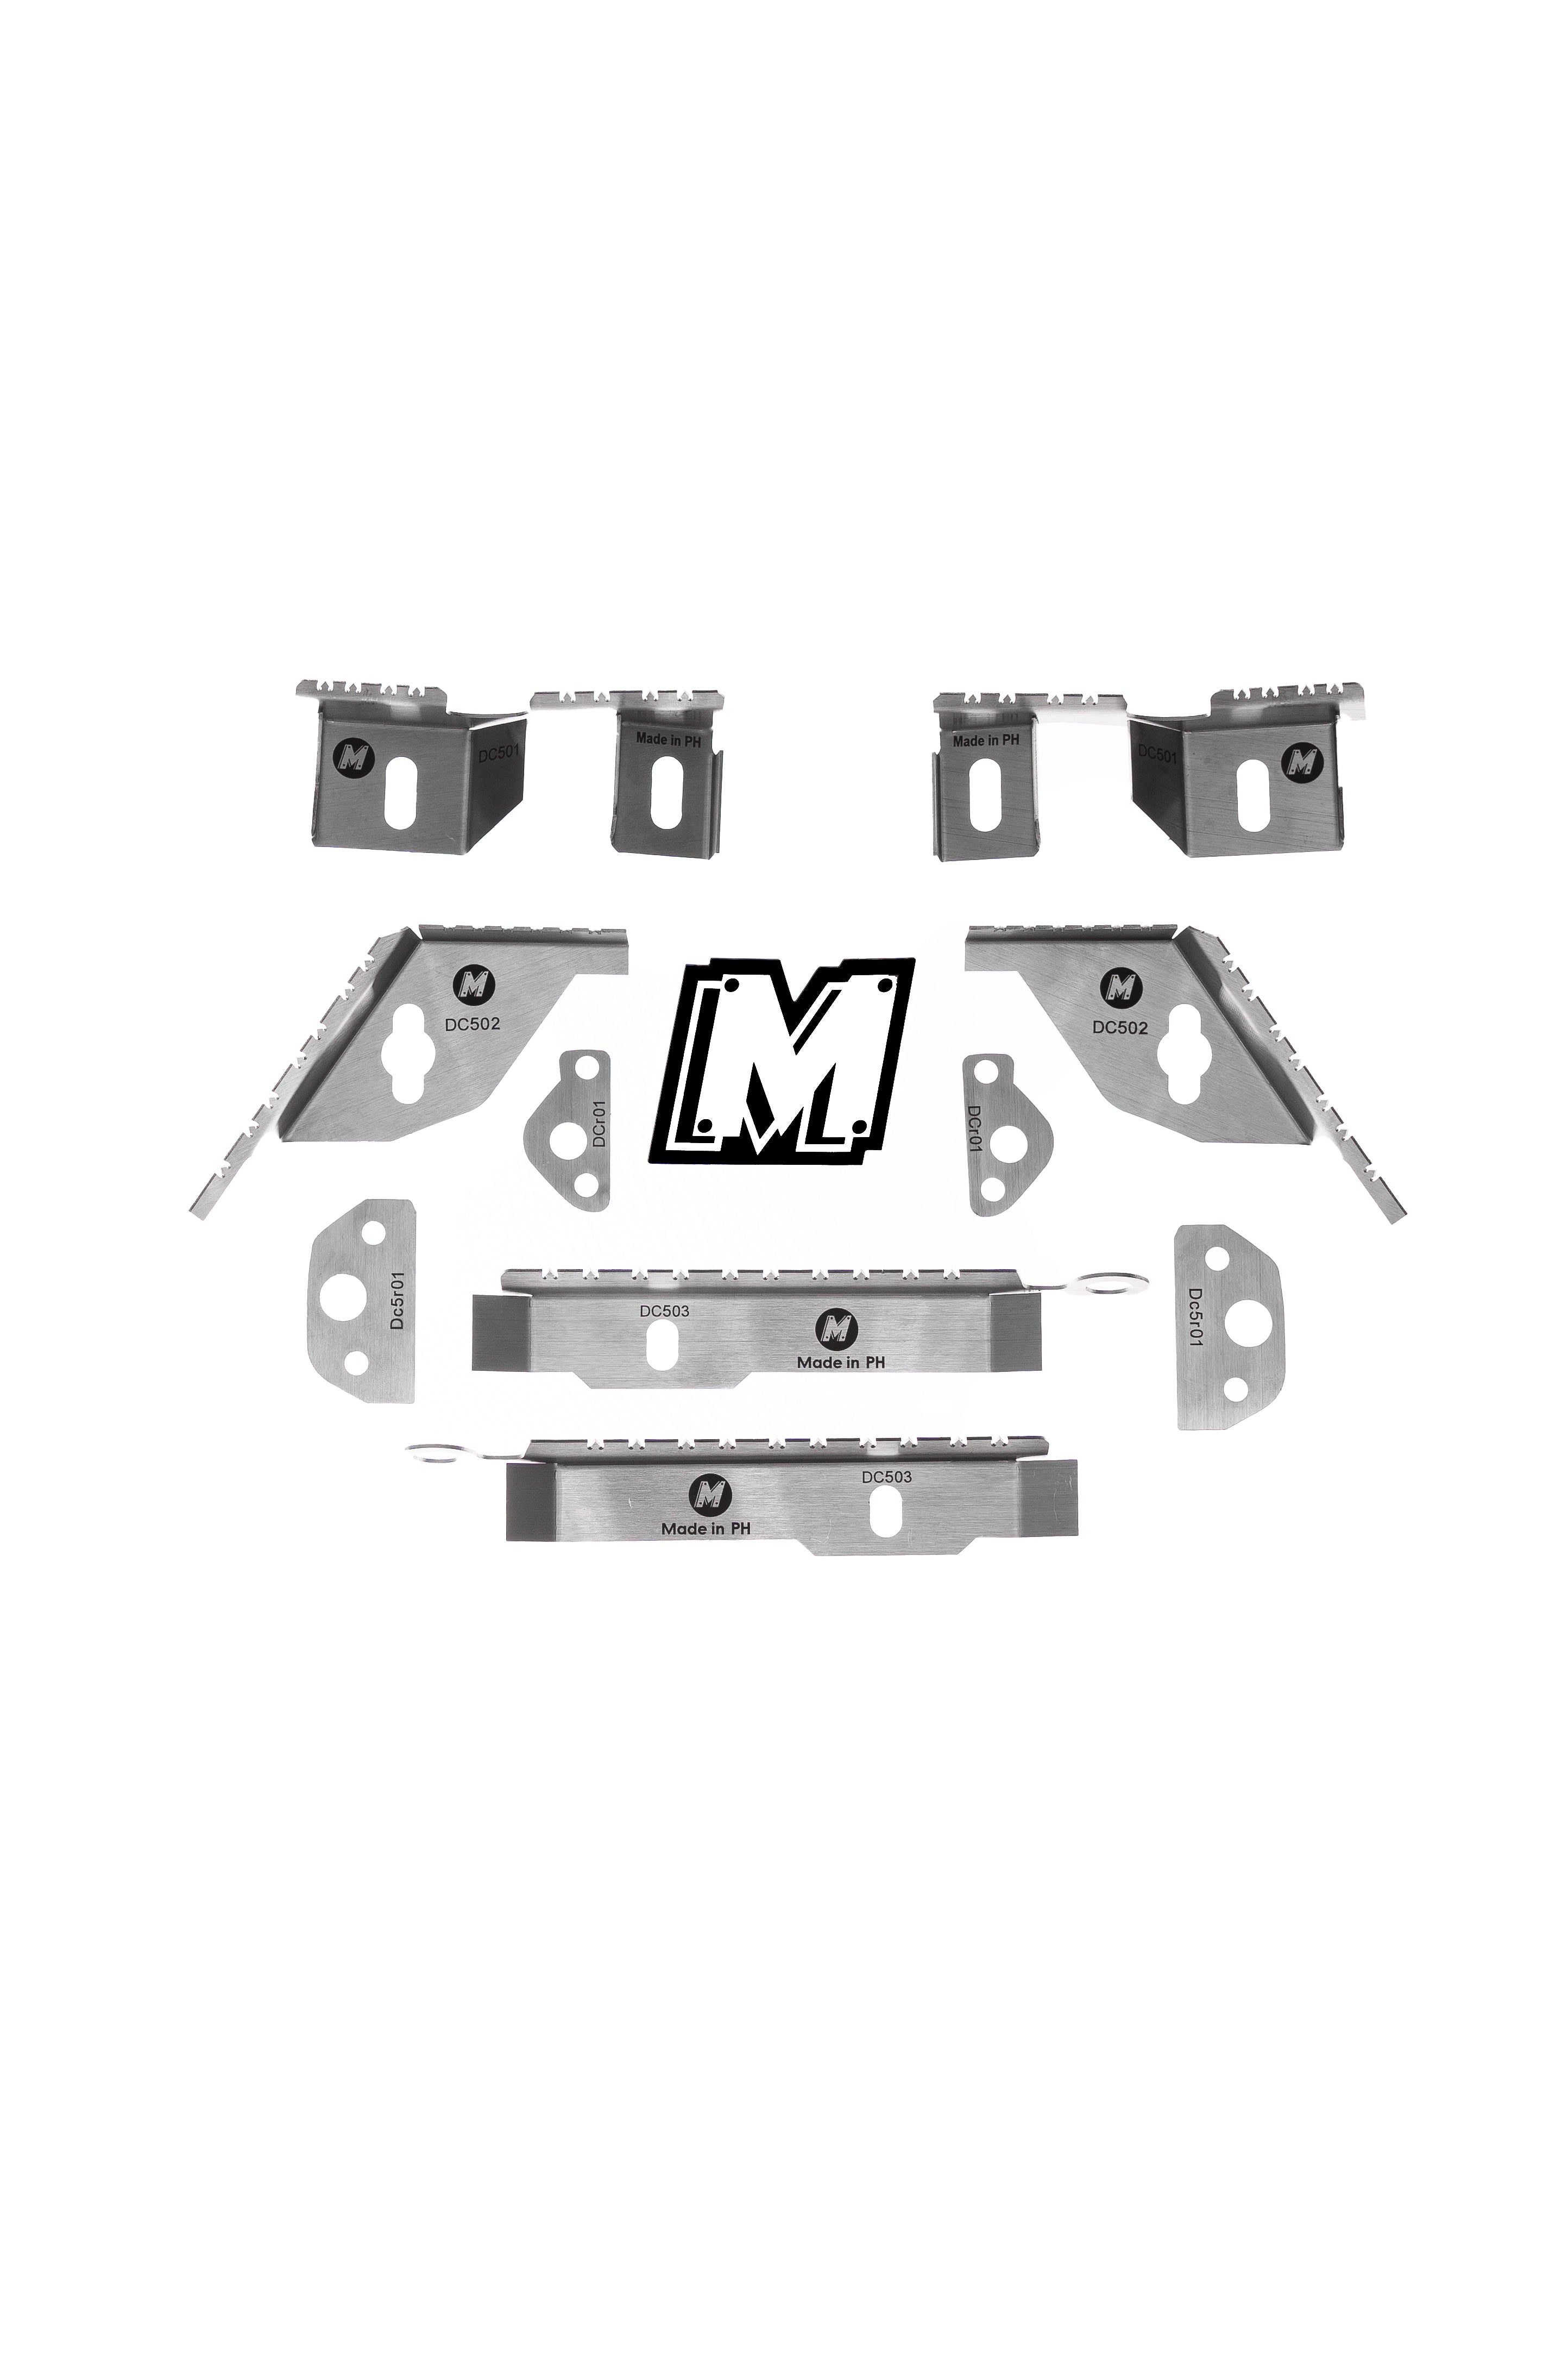 MAC Lifter Kit - DC5/RSX Front and Rear Lifter Kit